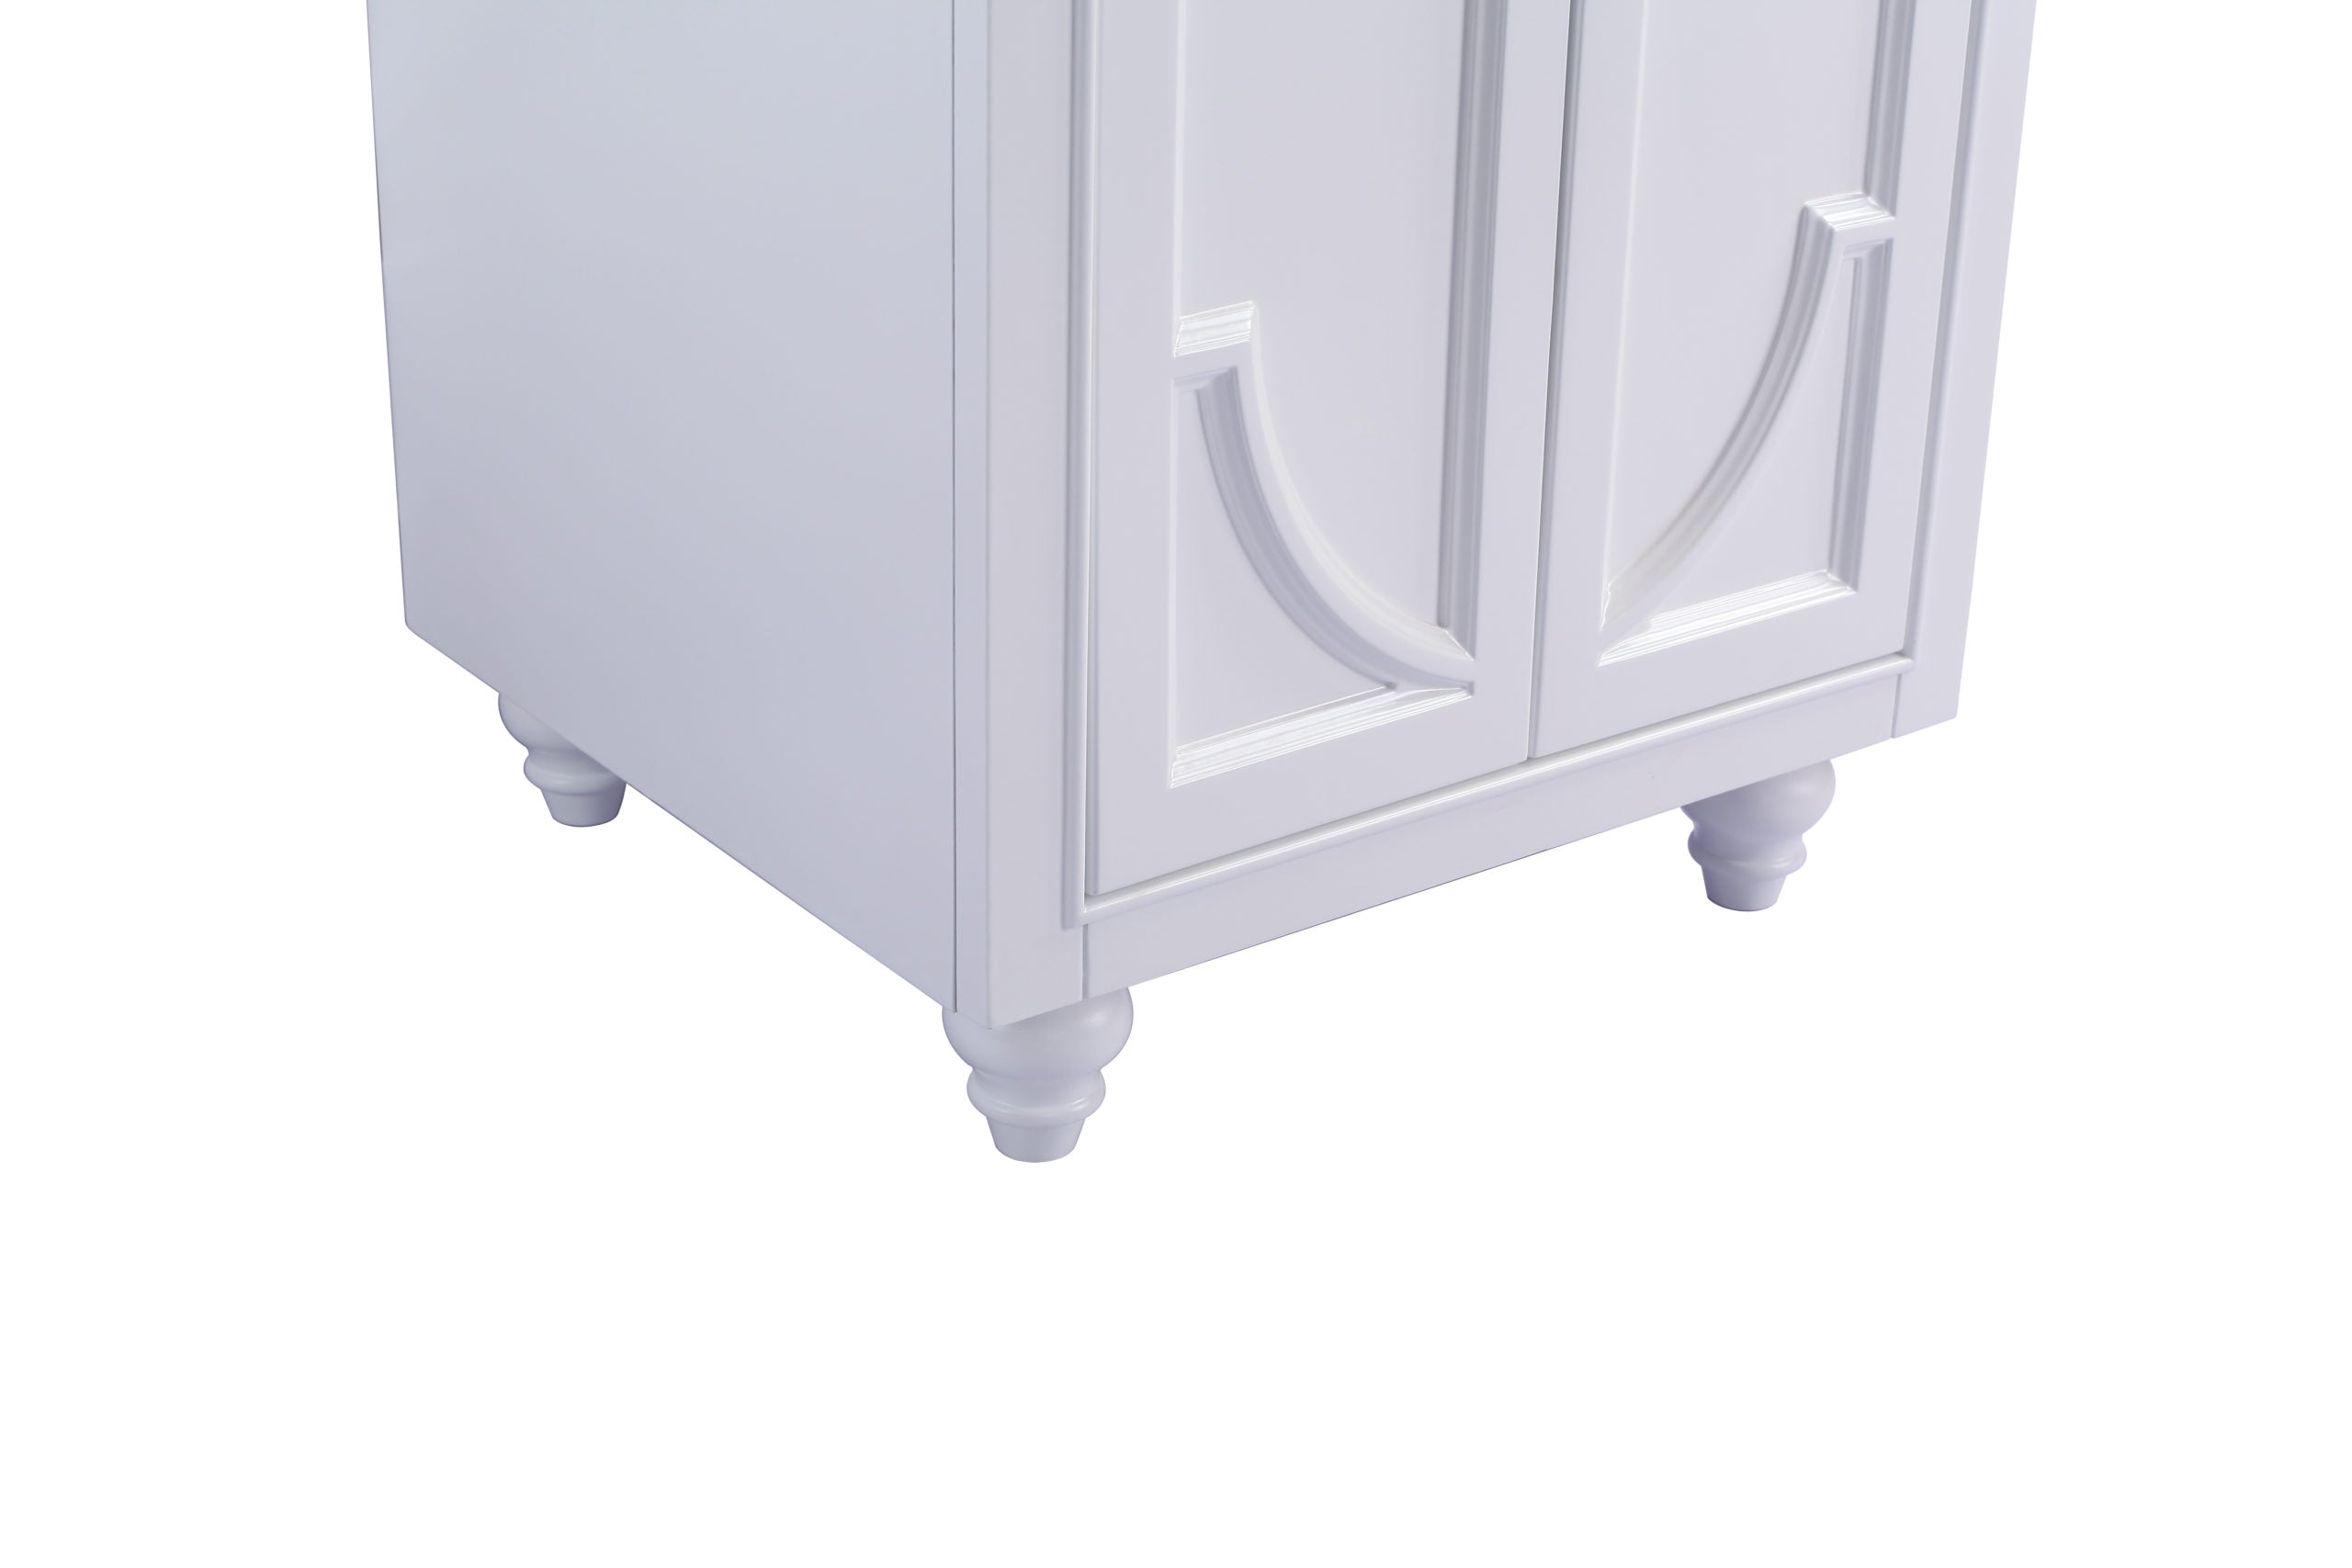 Laviva Odyssey 24" Maple Gray Bathroom Vanity Cabinet | 313613-24